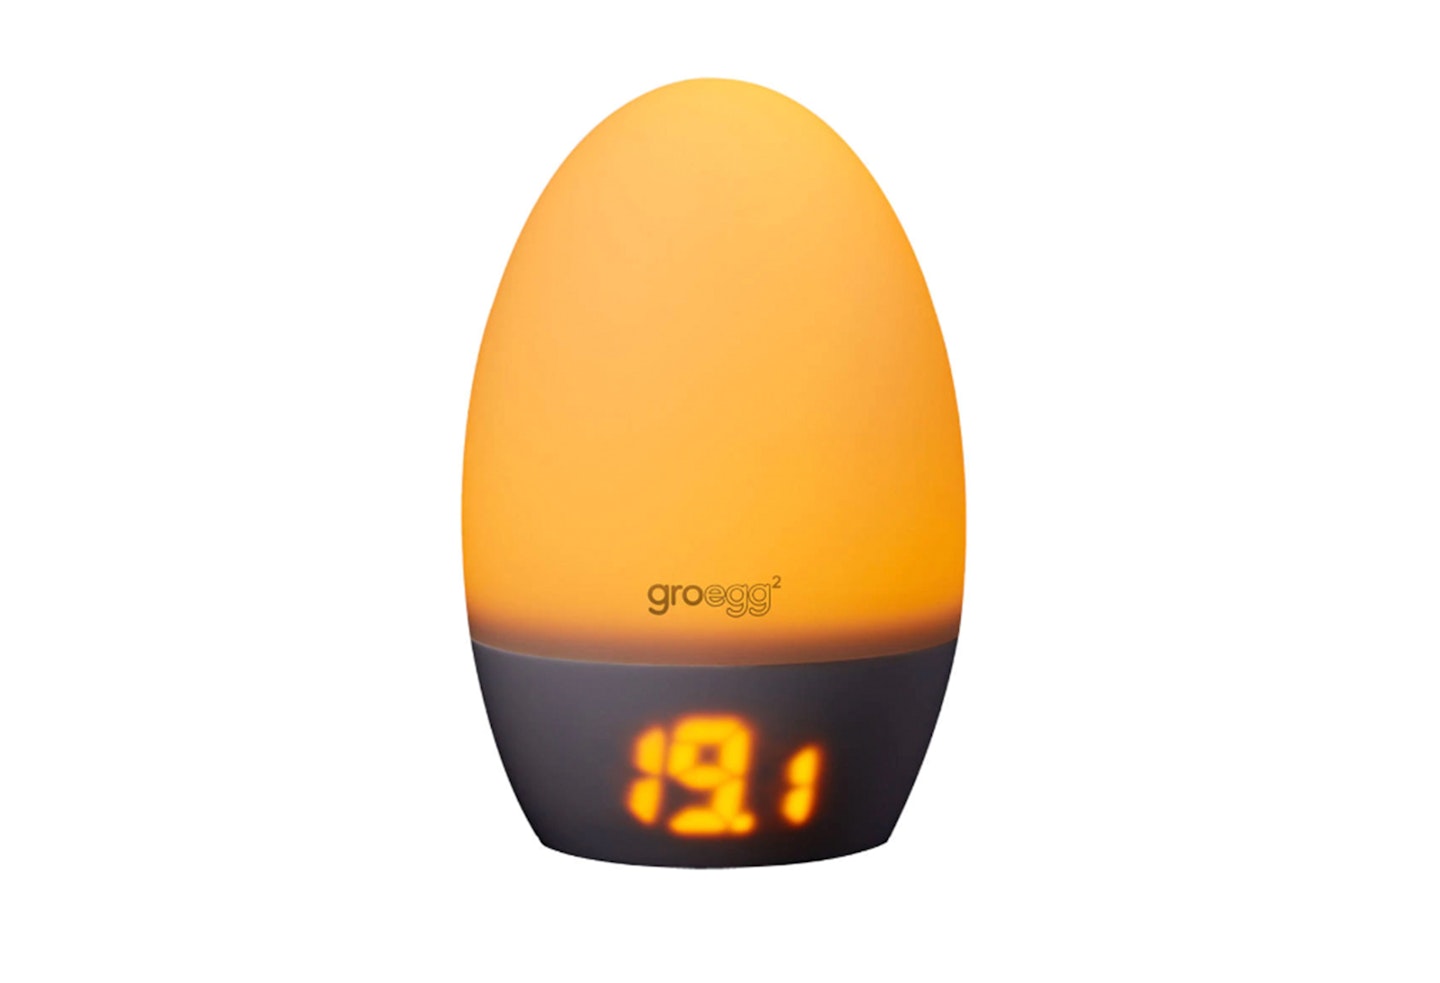 Room Thermometer - Original Gro egg, Safe Sleep